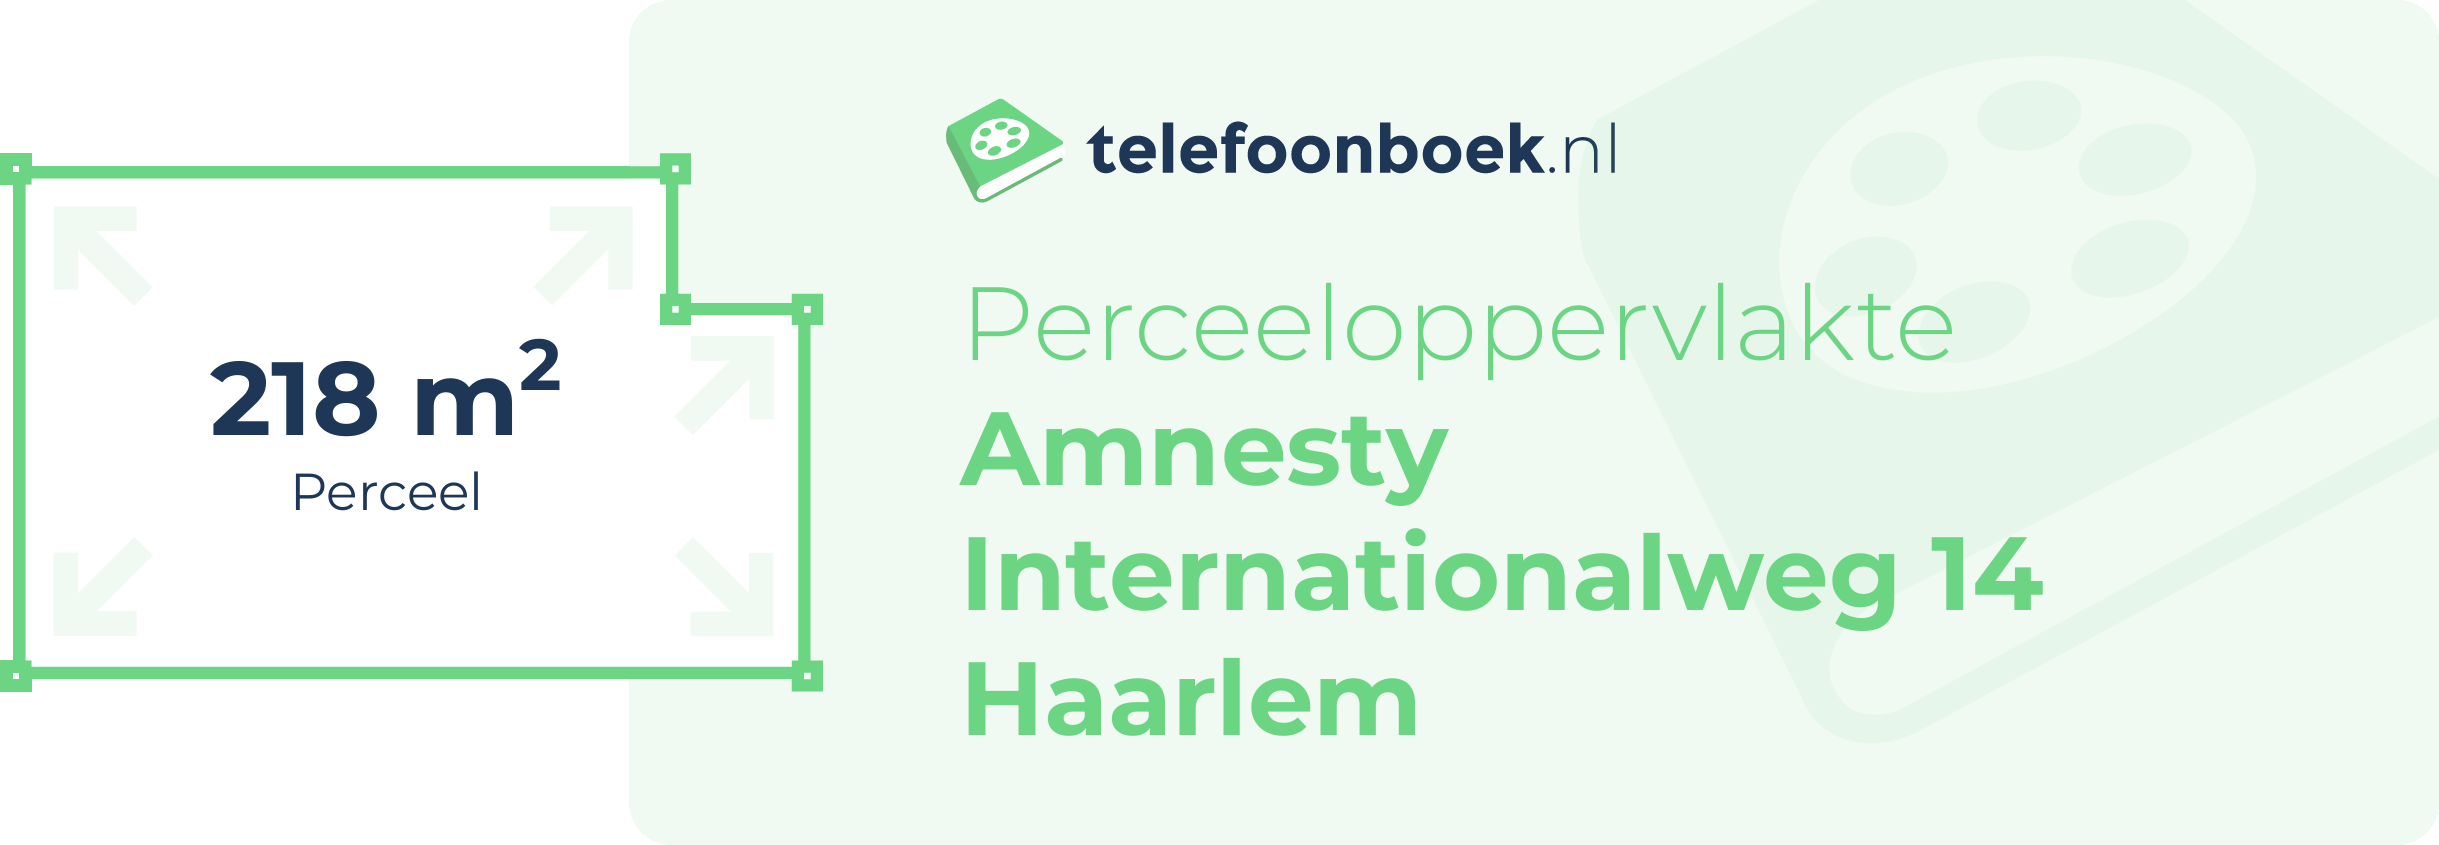 Perceeloppervlakte Amnesty Internationalweg 14 Haarlem